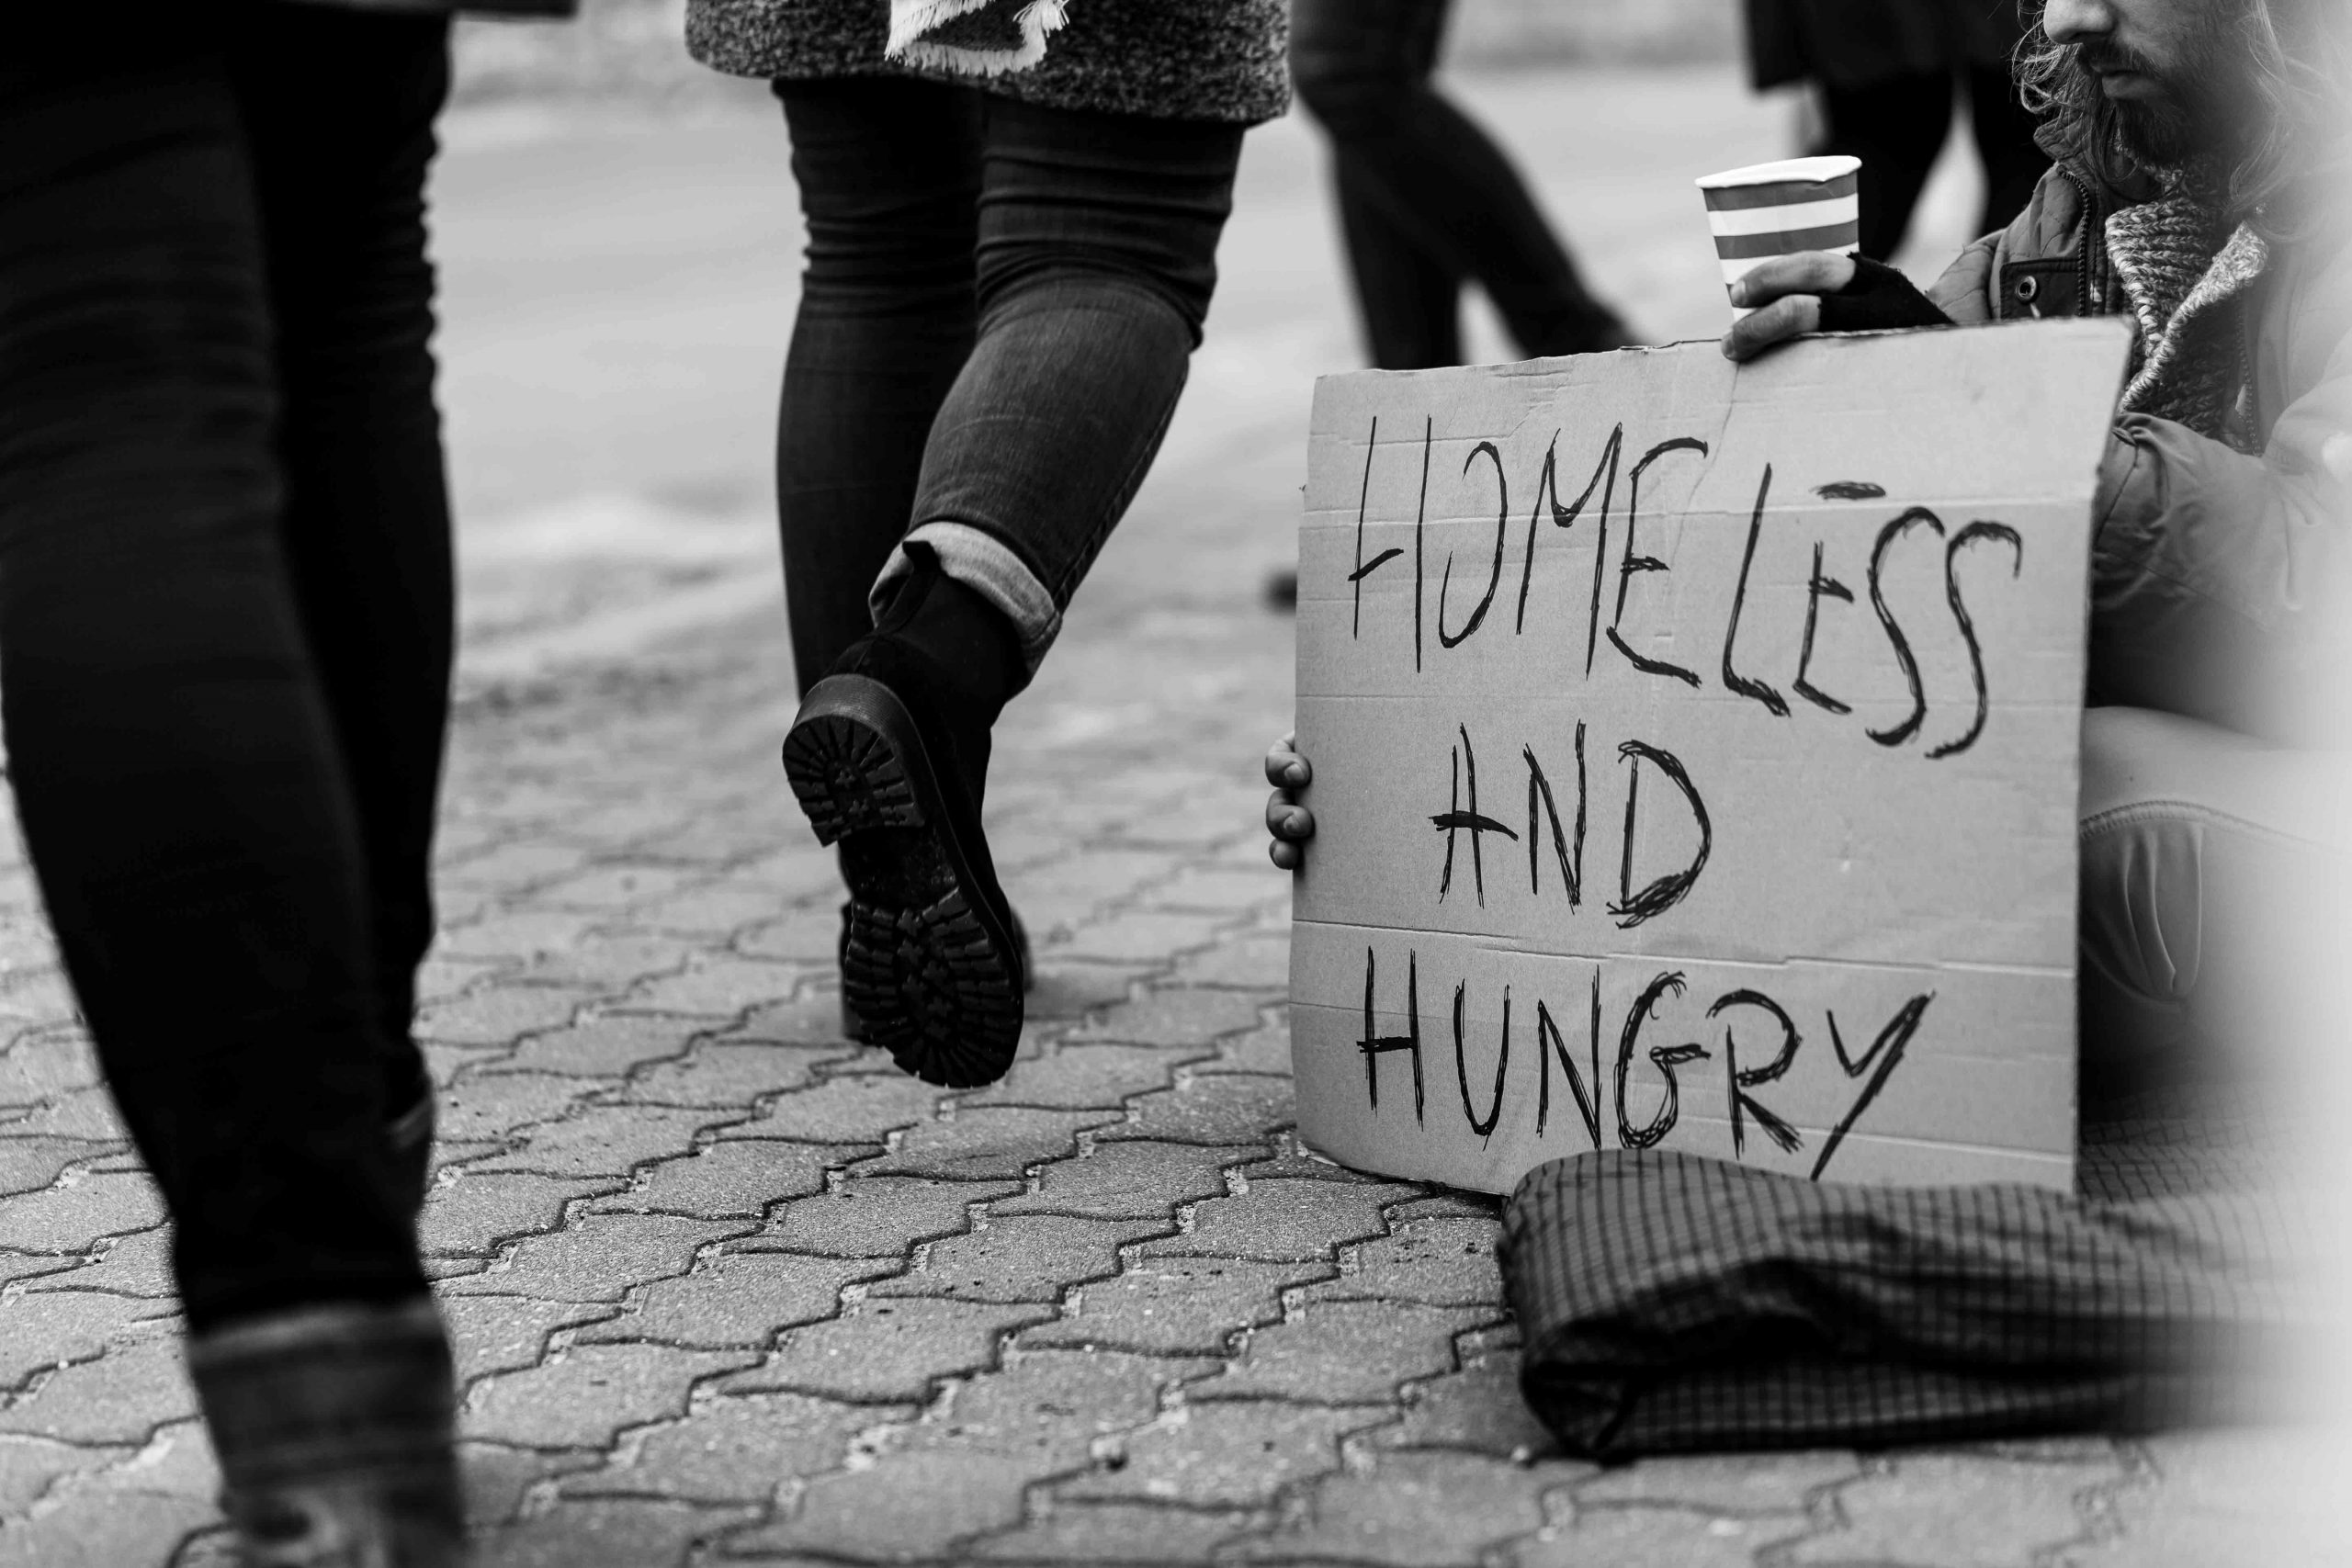 Jeff Bezos awards 40 grants worth $123 million to organizations fighting homelessness